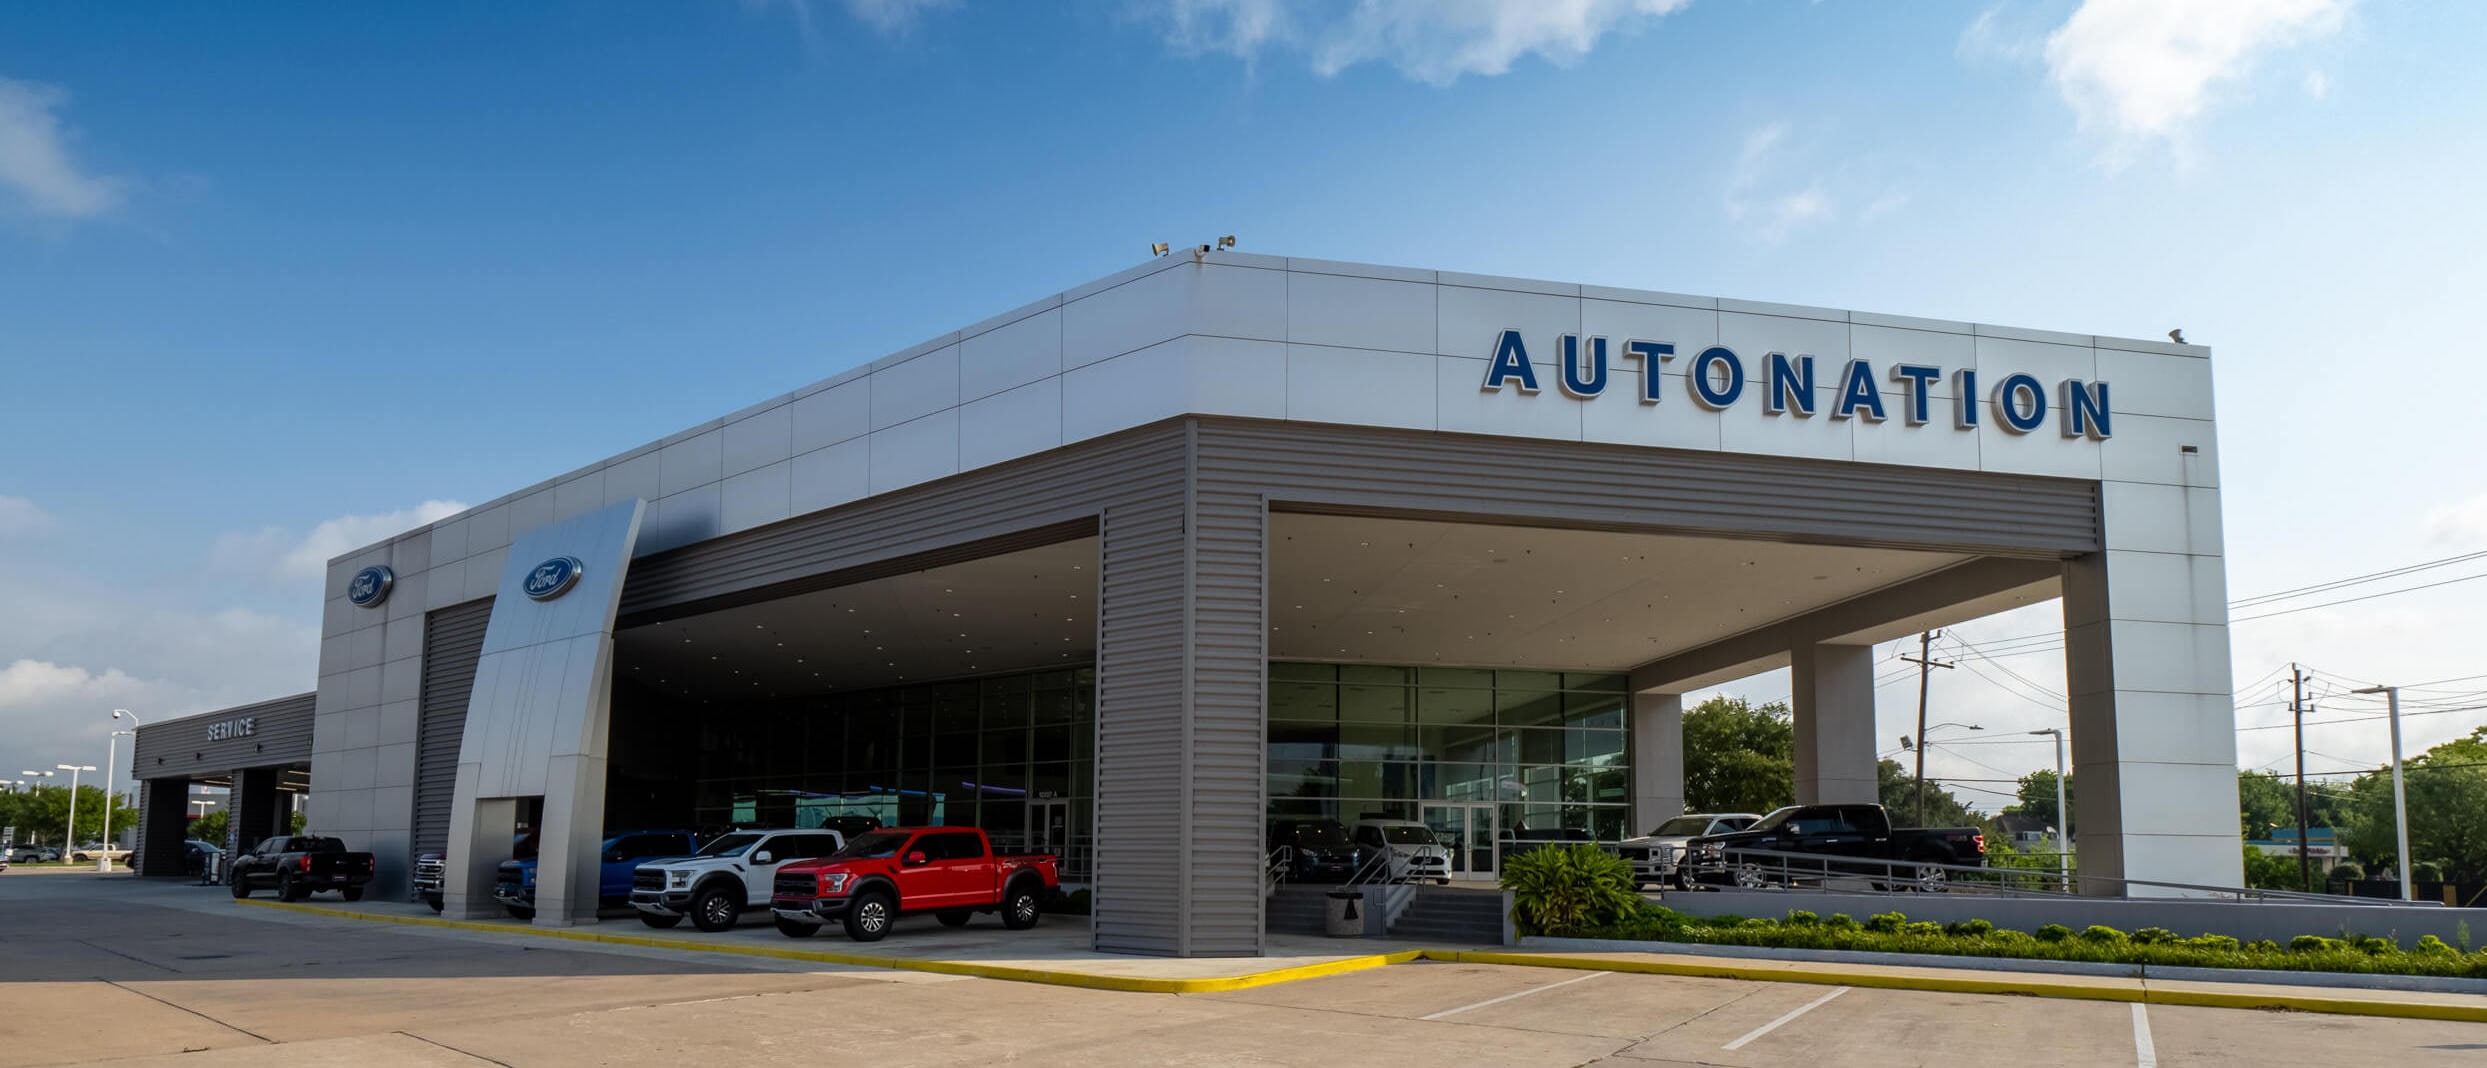 Autonation Ford exterior building